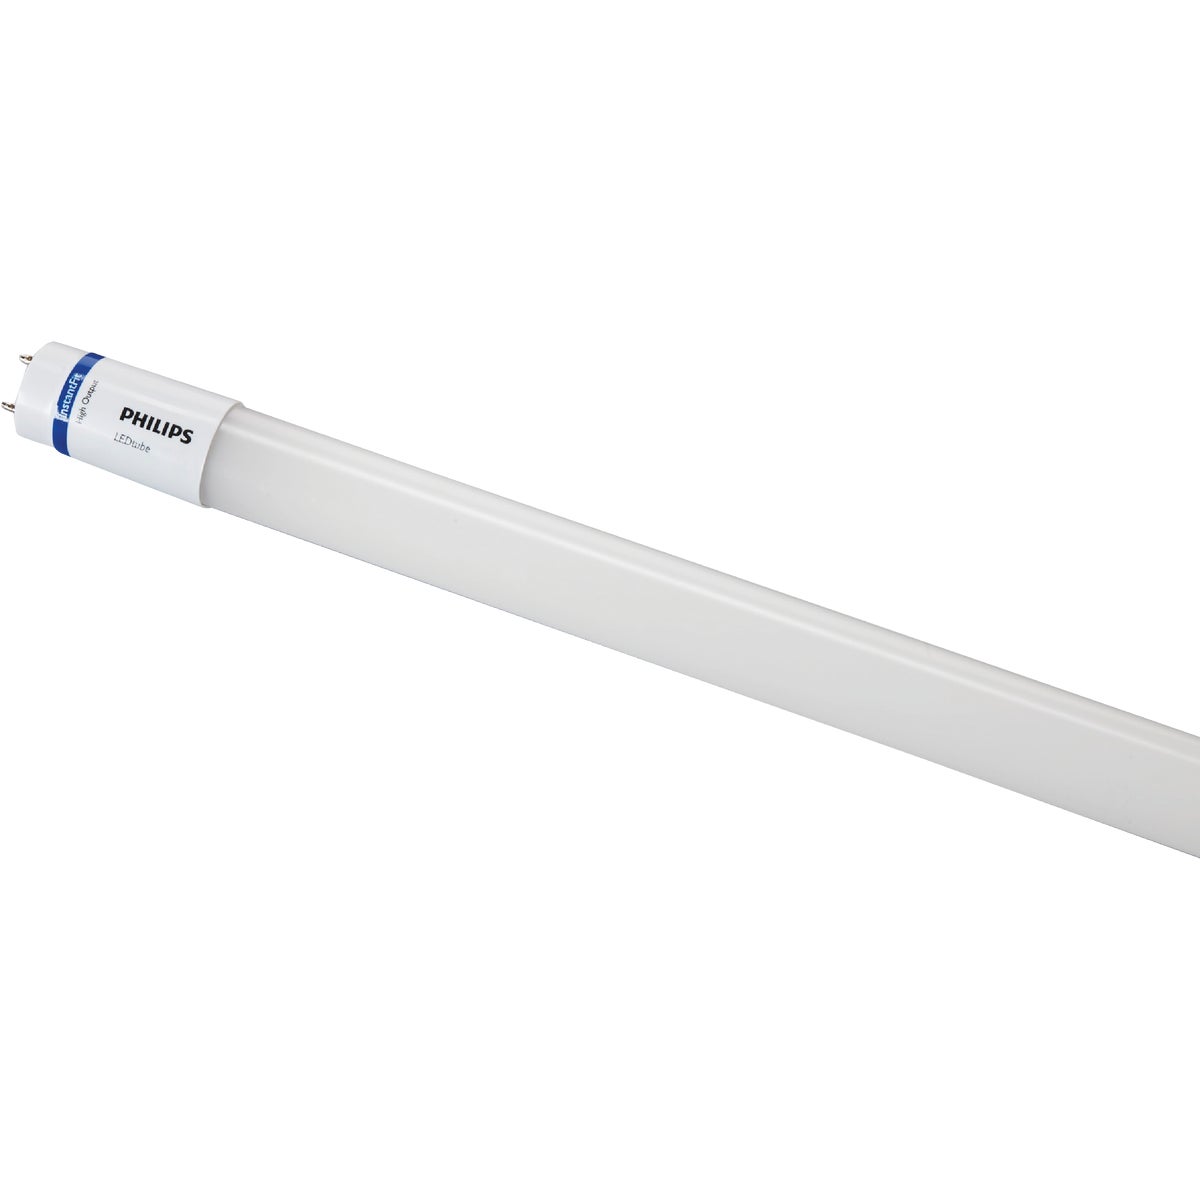 Item 500873, InstantFit T8 LED (light emitting diode) tube with bi-pin base.